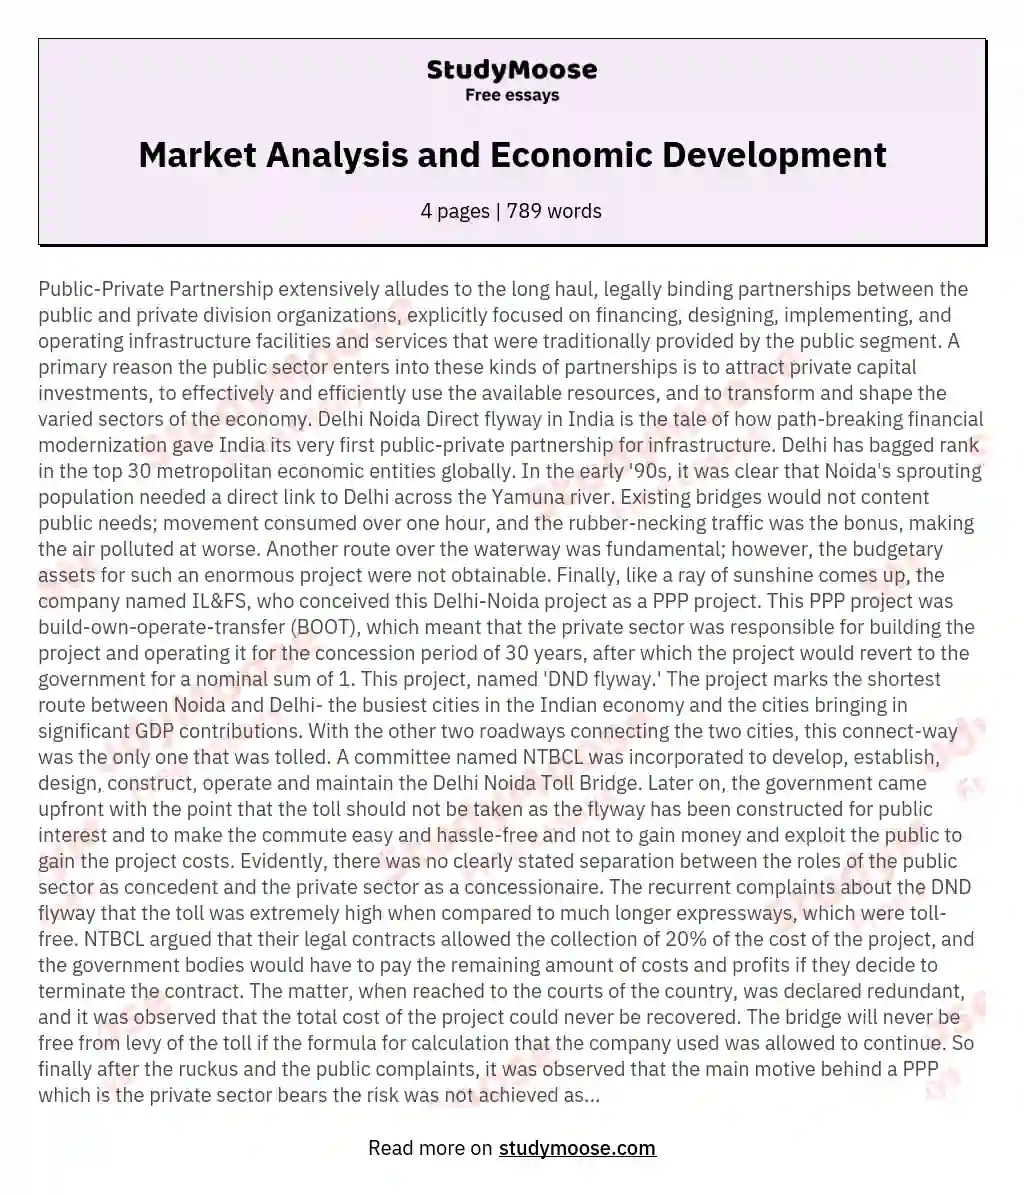 Market Analysis and Economic Development essay